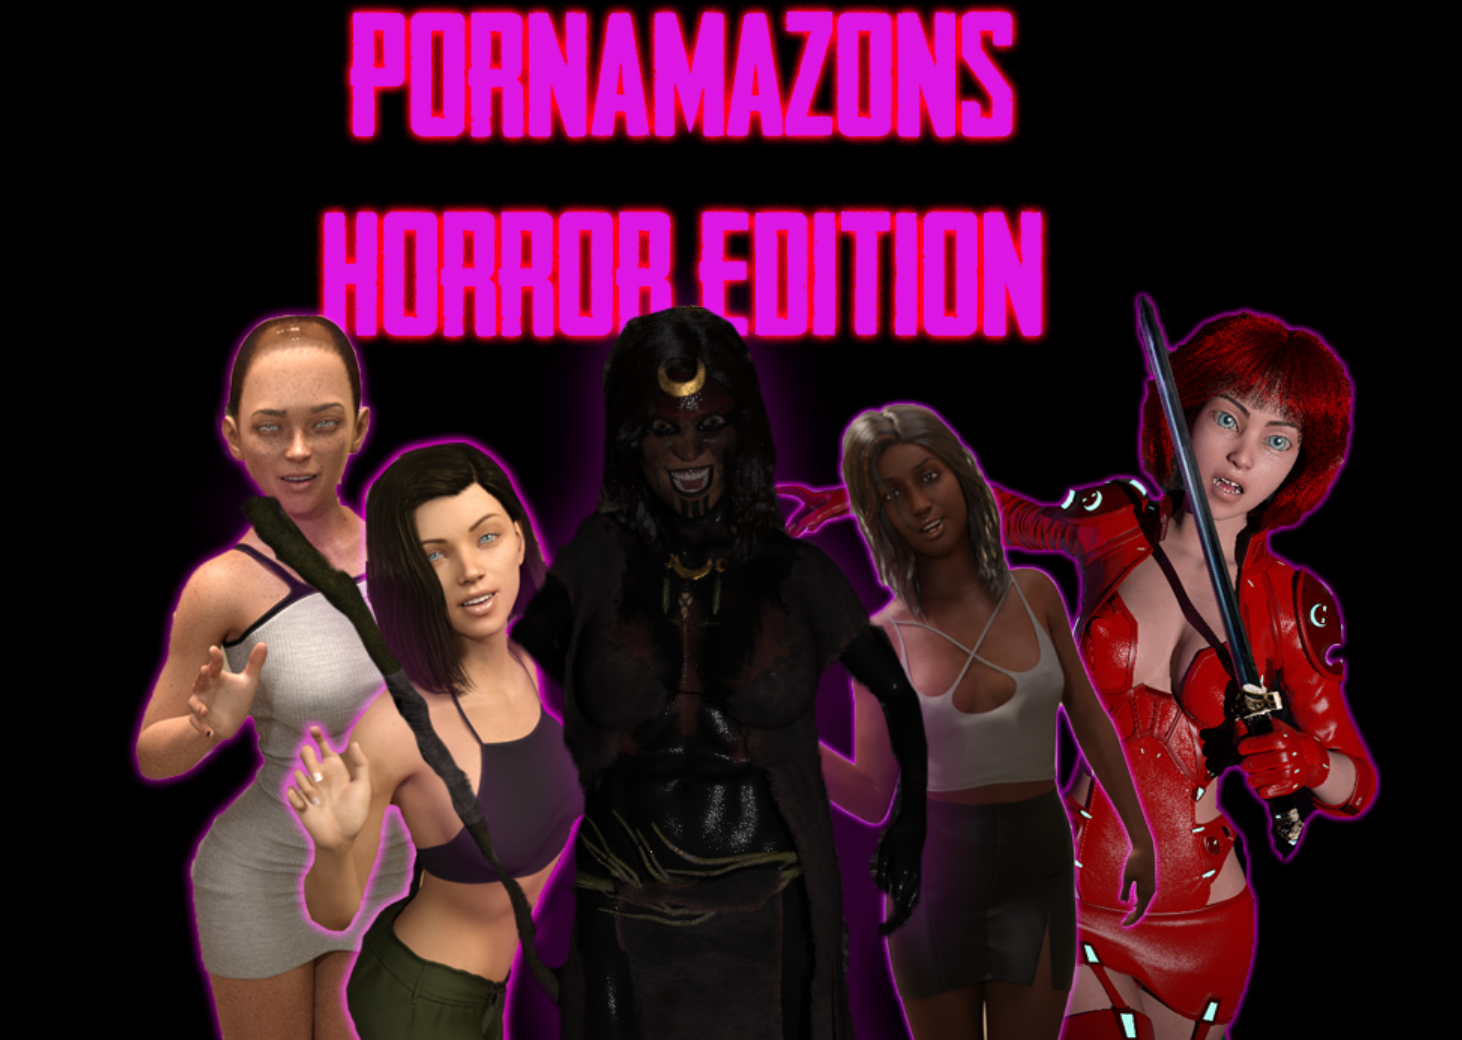 PornAmazons Horror Edition